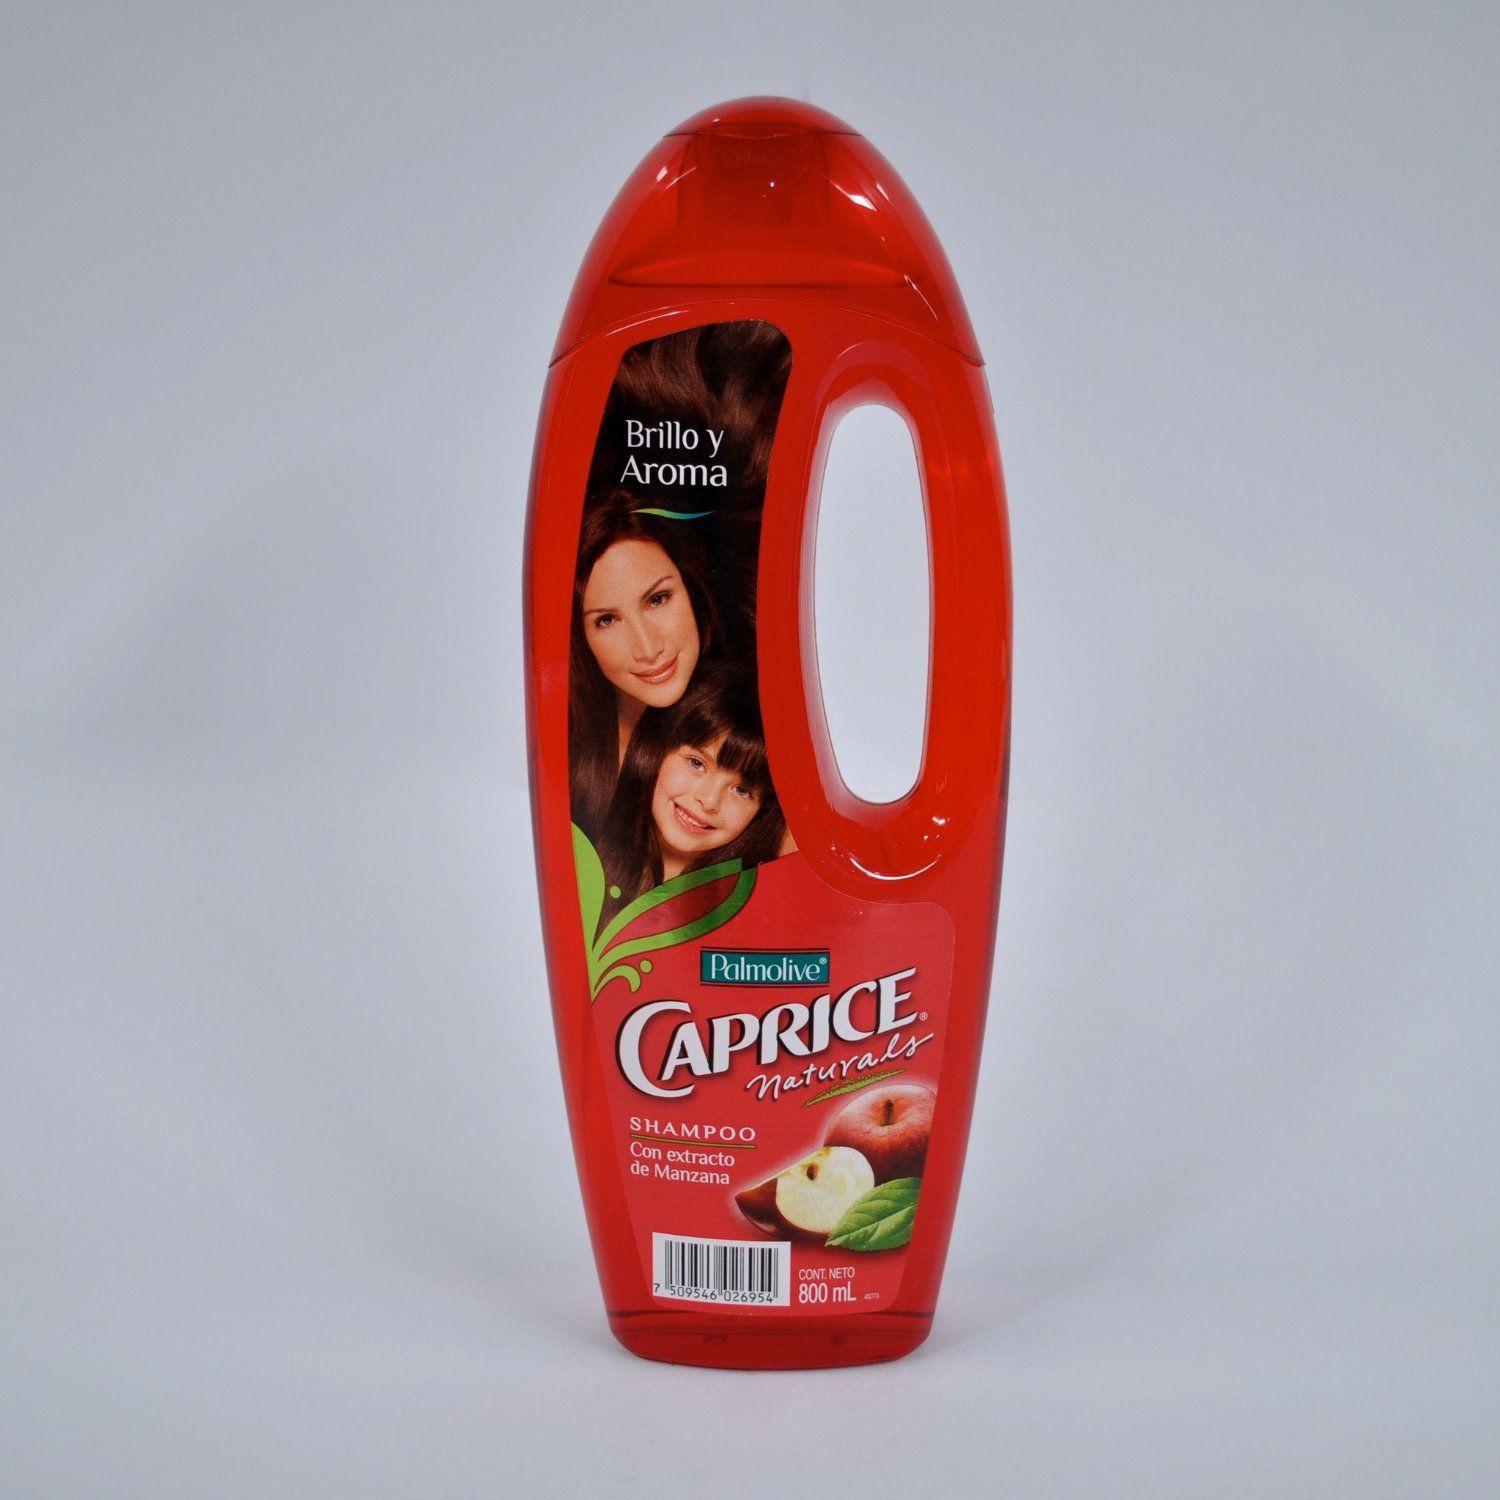 Caprice Shampoo Logo - Buy Palmolive Caprice shampoo (800ML) in Cheap Price on Alibaba.com